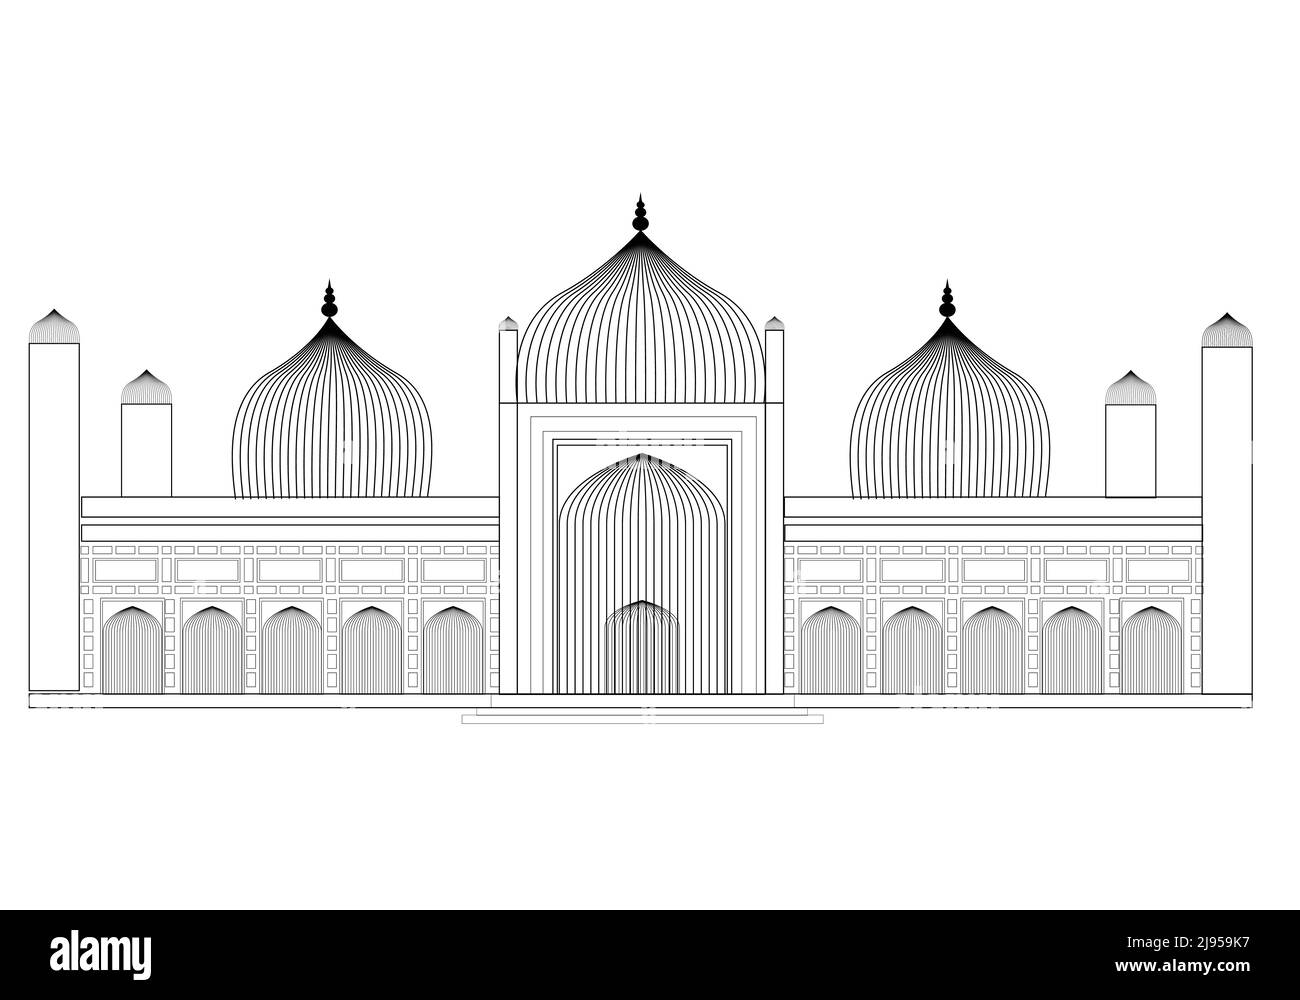 Badshahi Mosque, Line Art, vector, Black and white, Outline City Landmark, Pakistan Stock Vector